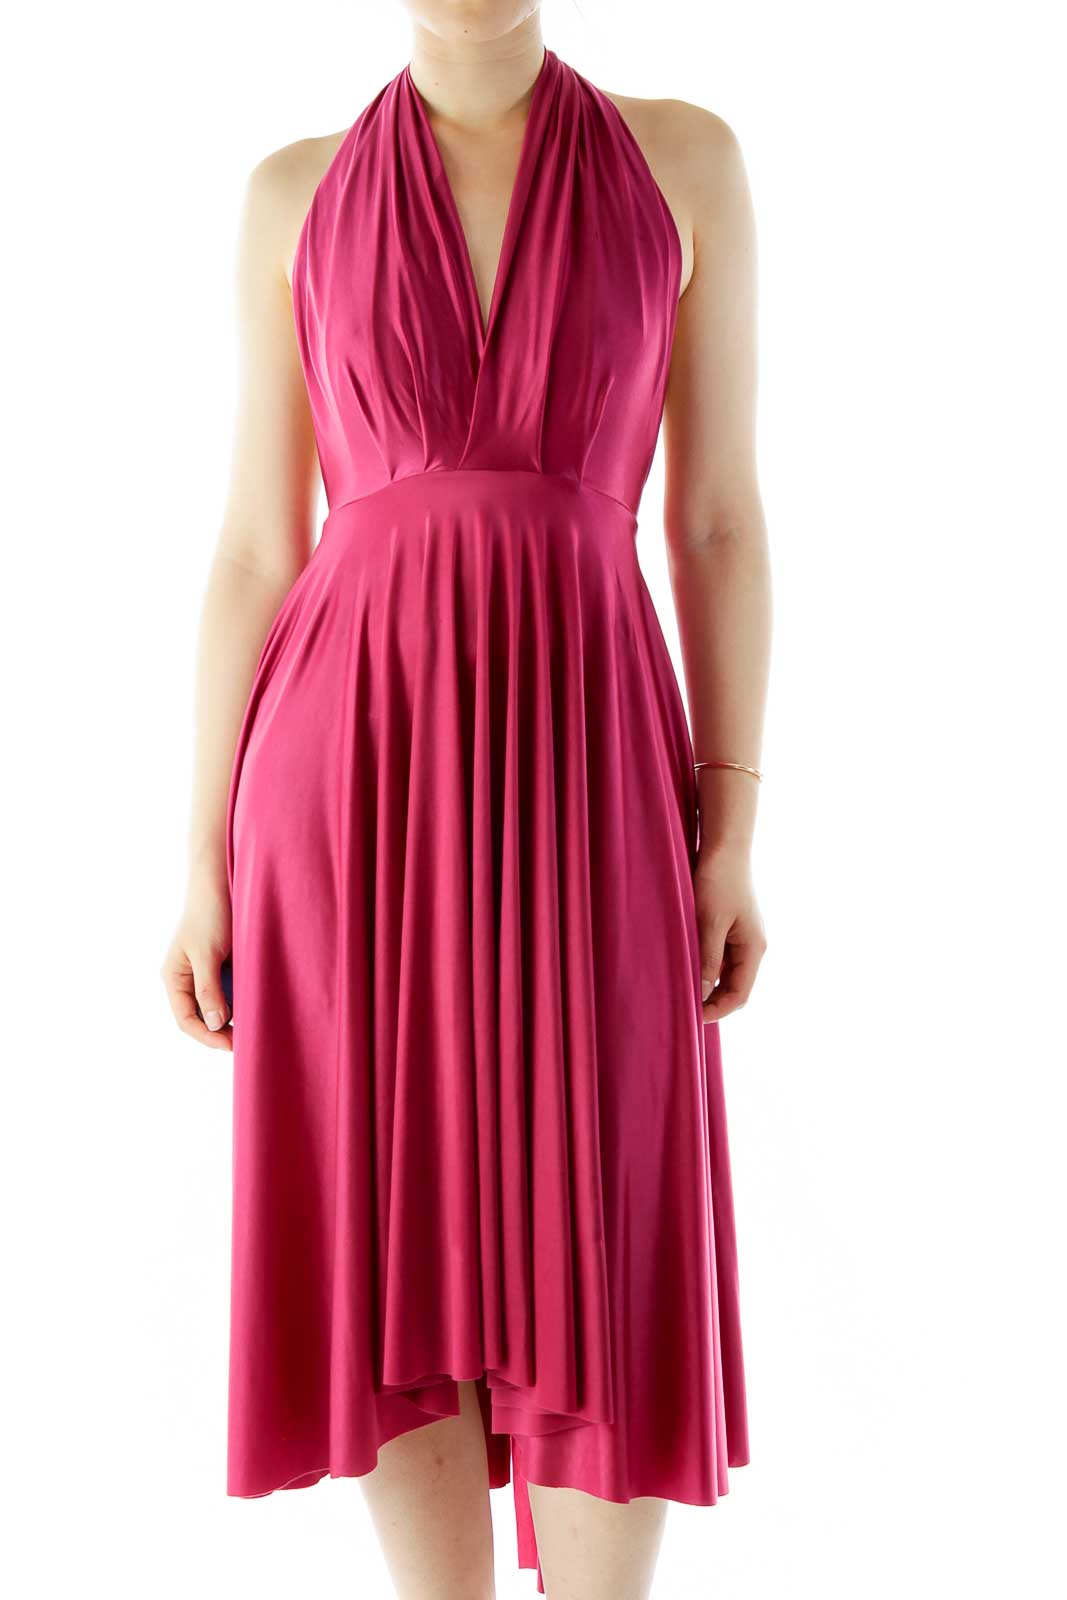 Pink Satin Wrap Cocktail Dress Front